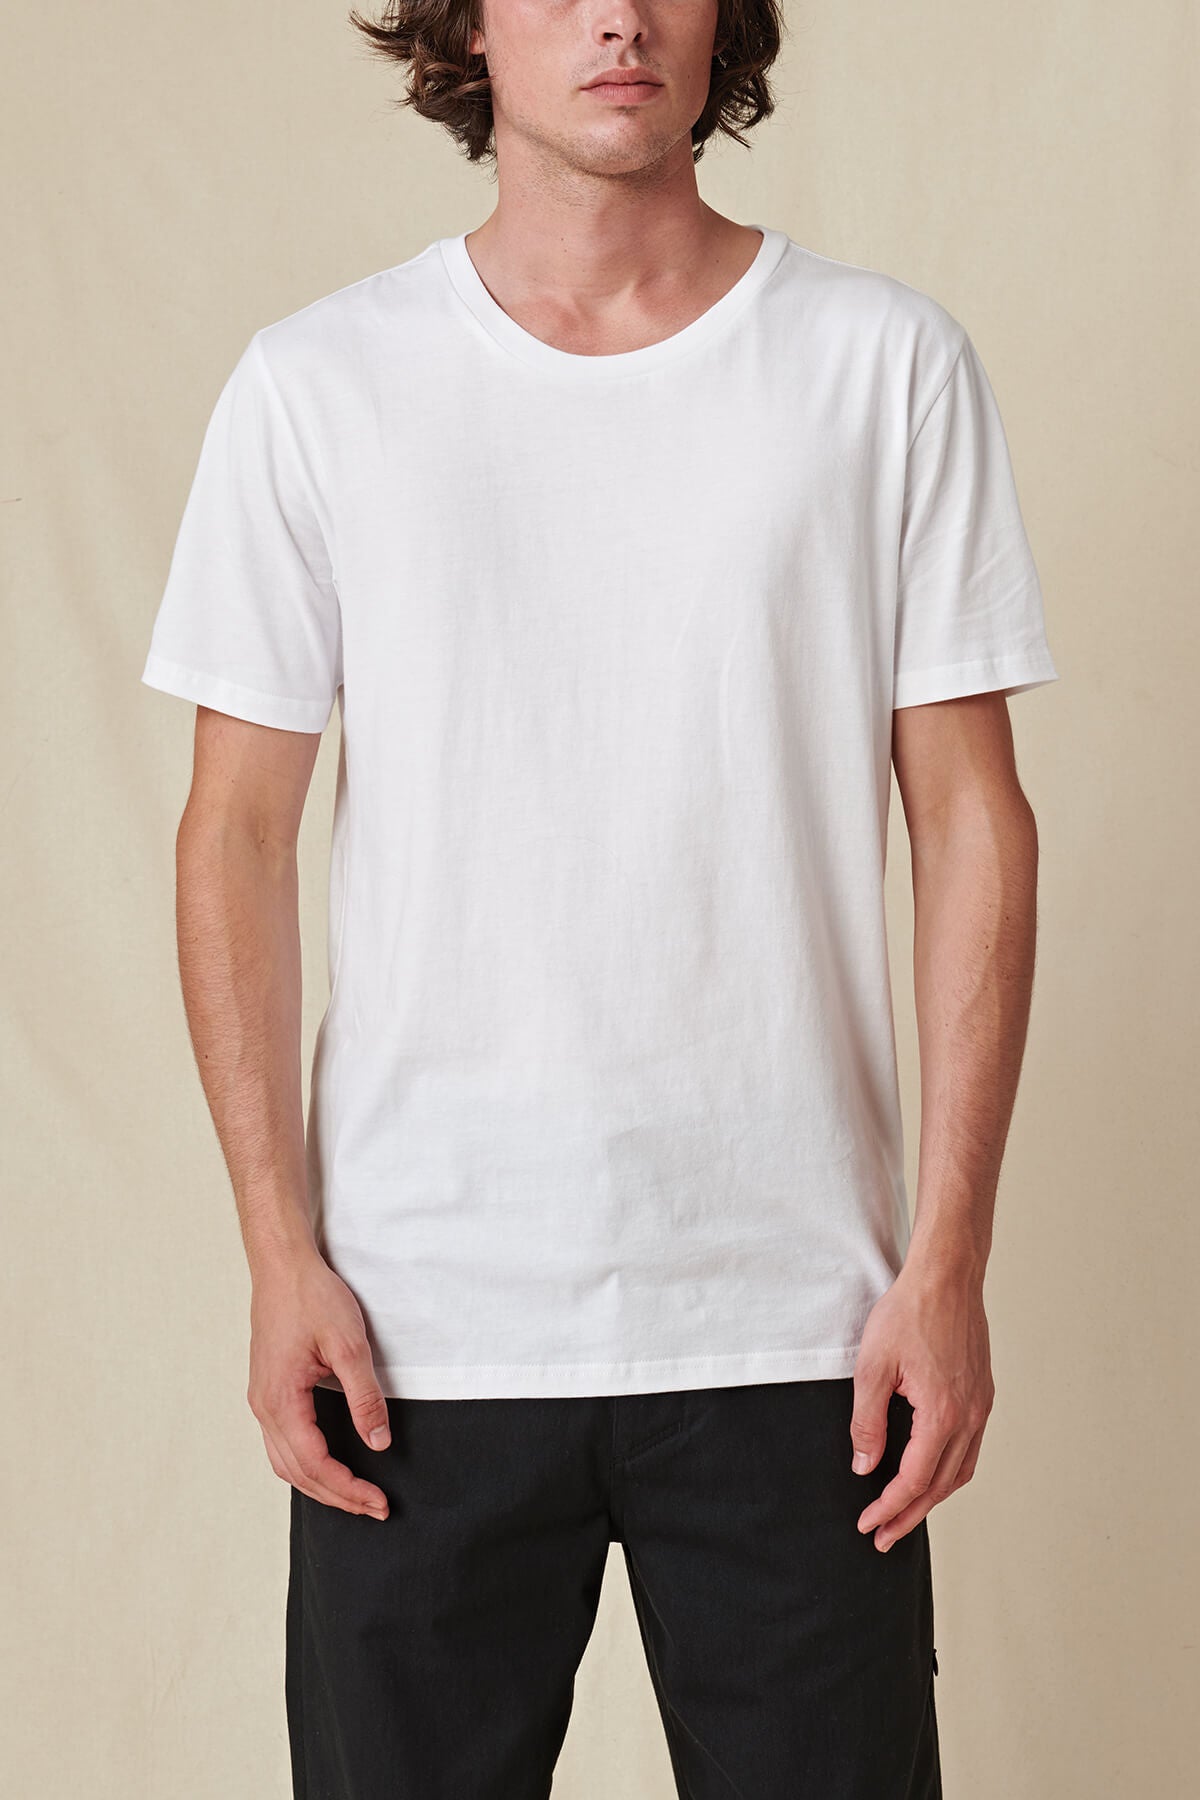 tee-shirt down under white